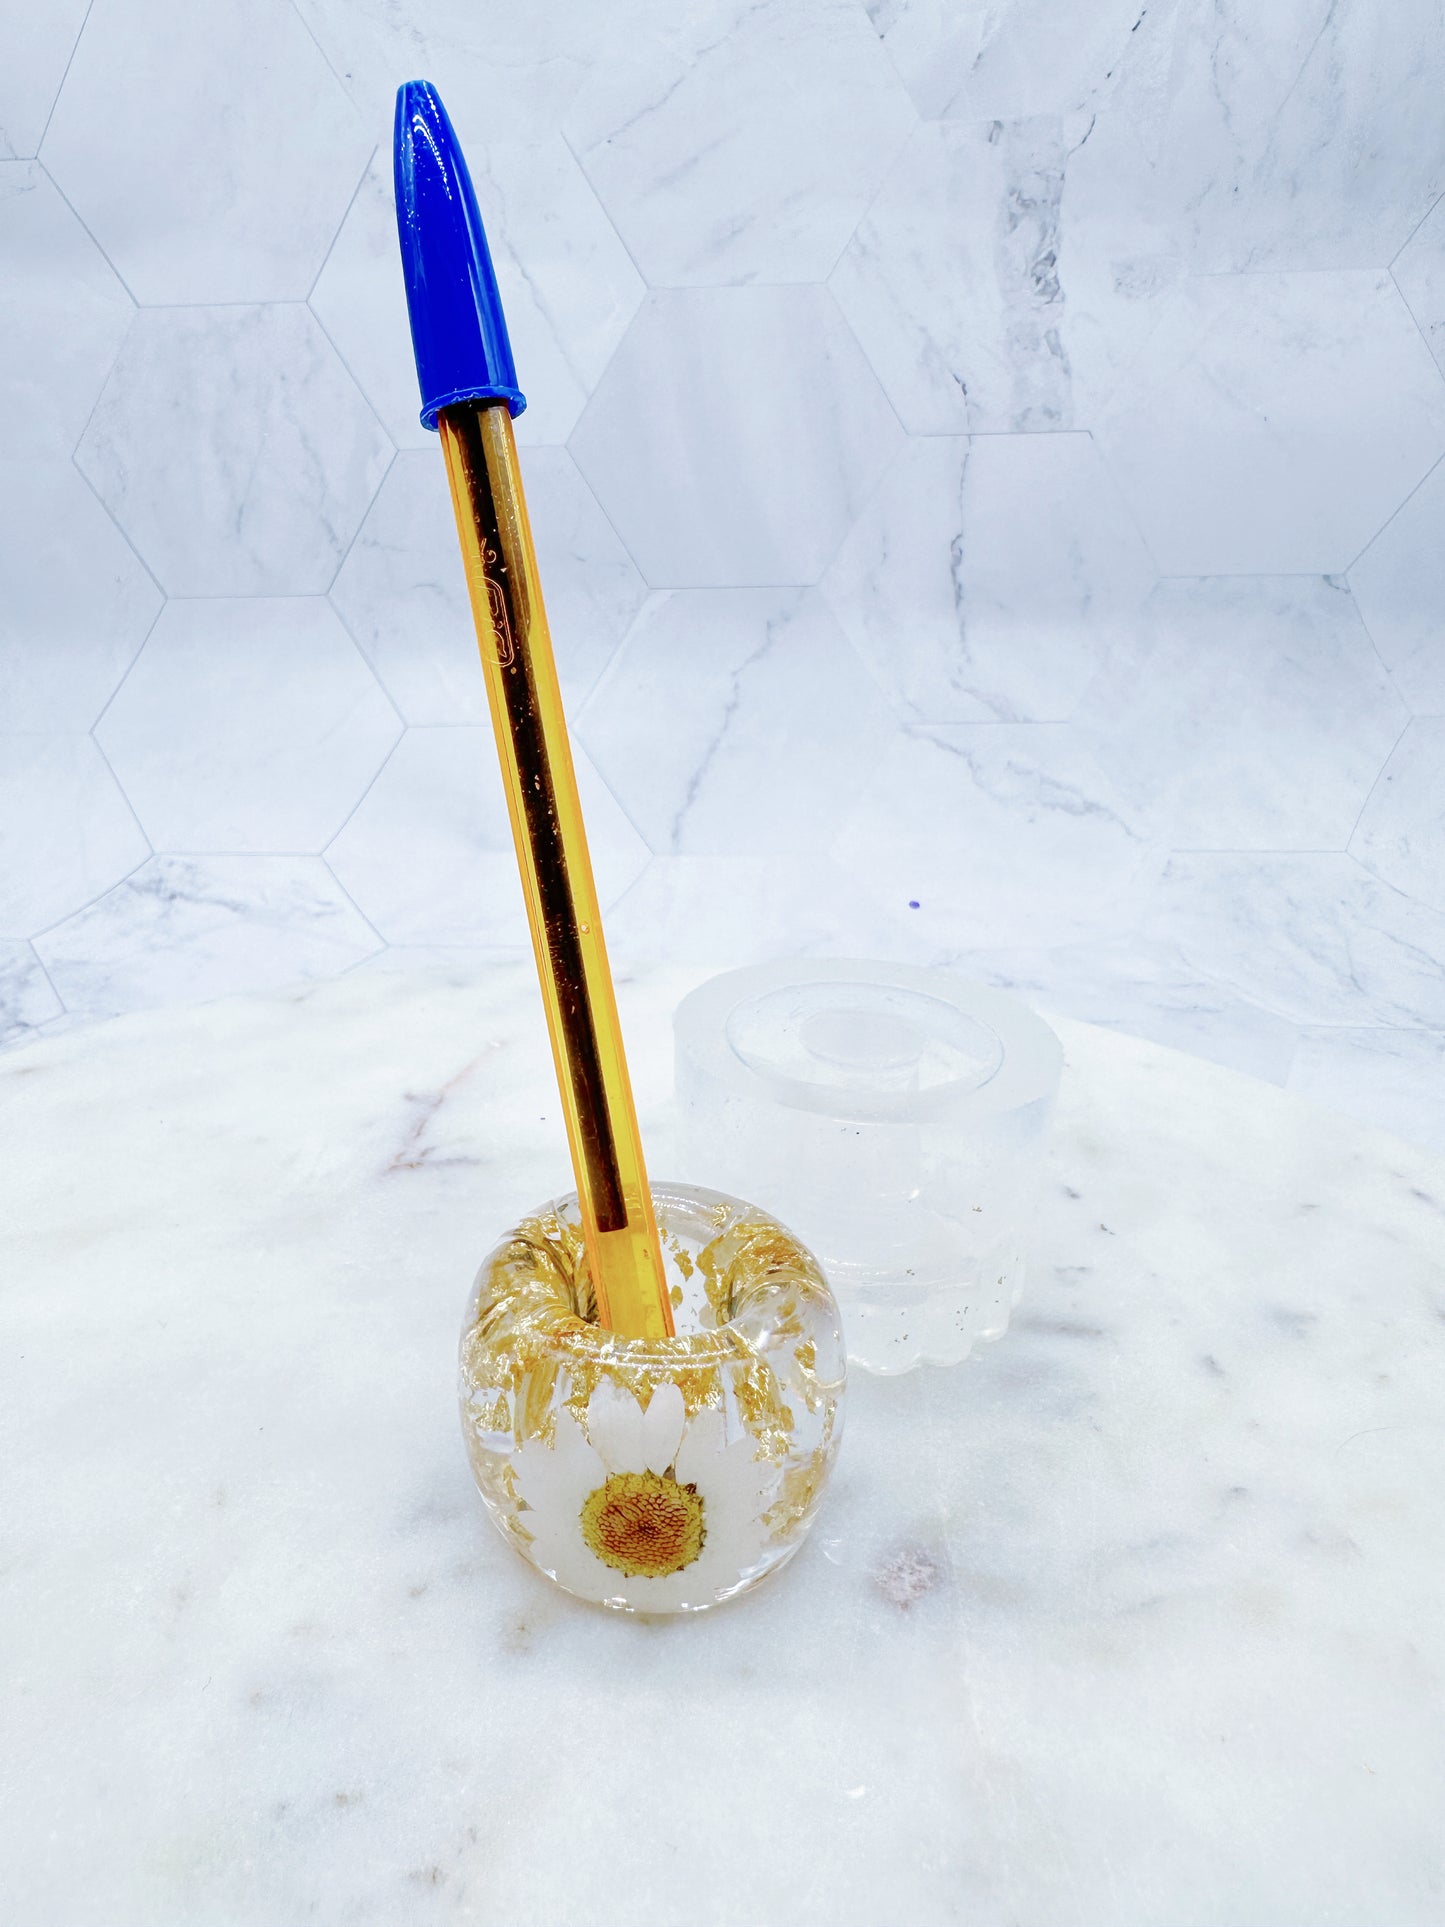 Round Pen/ Toothbrush Holder Mold